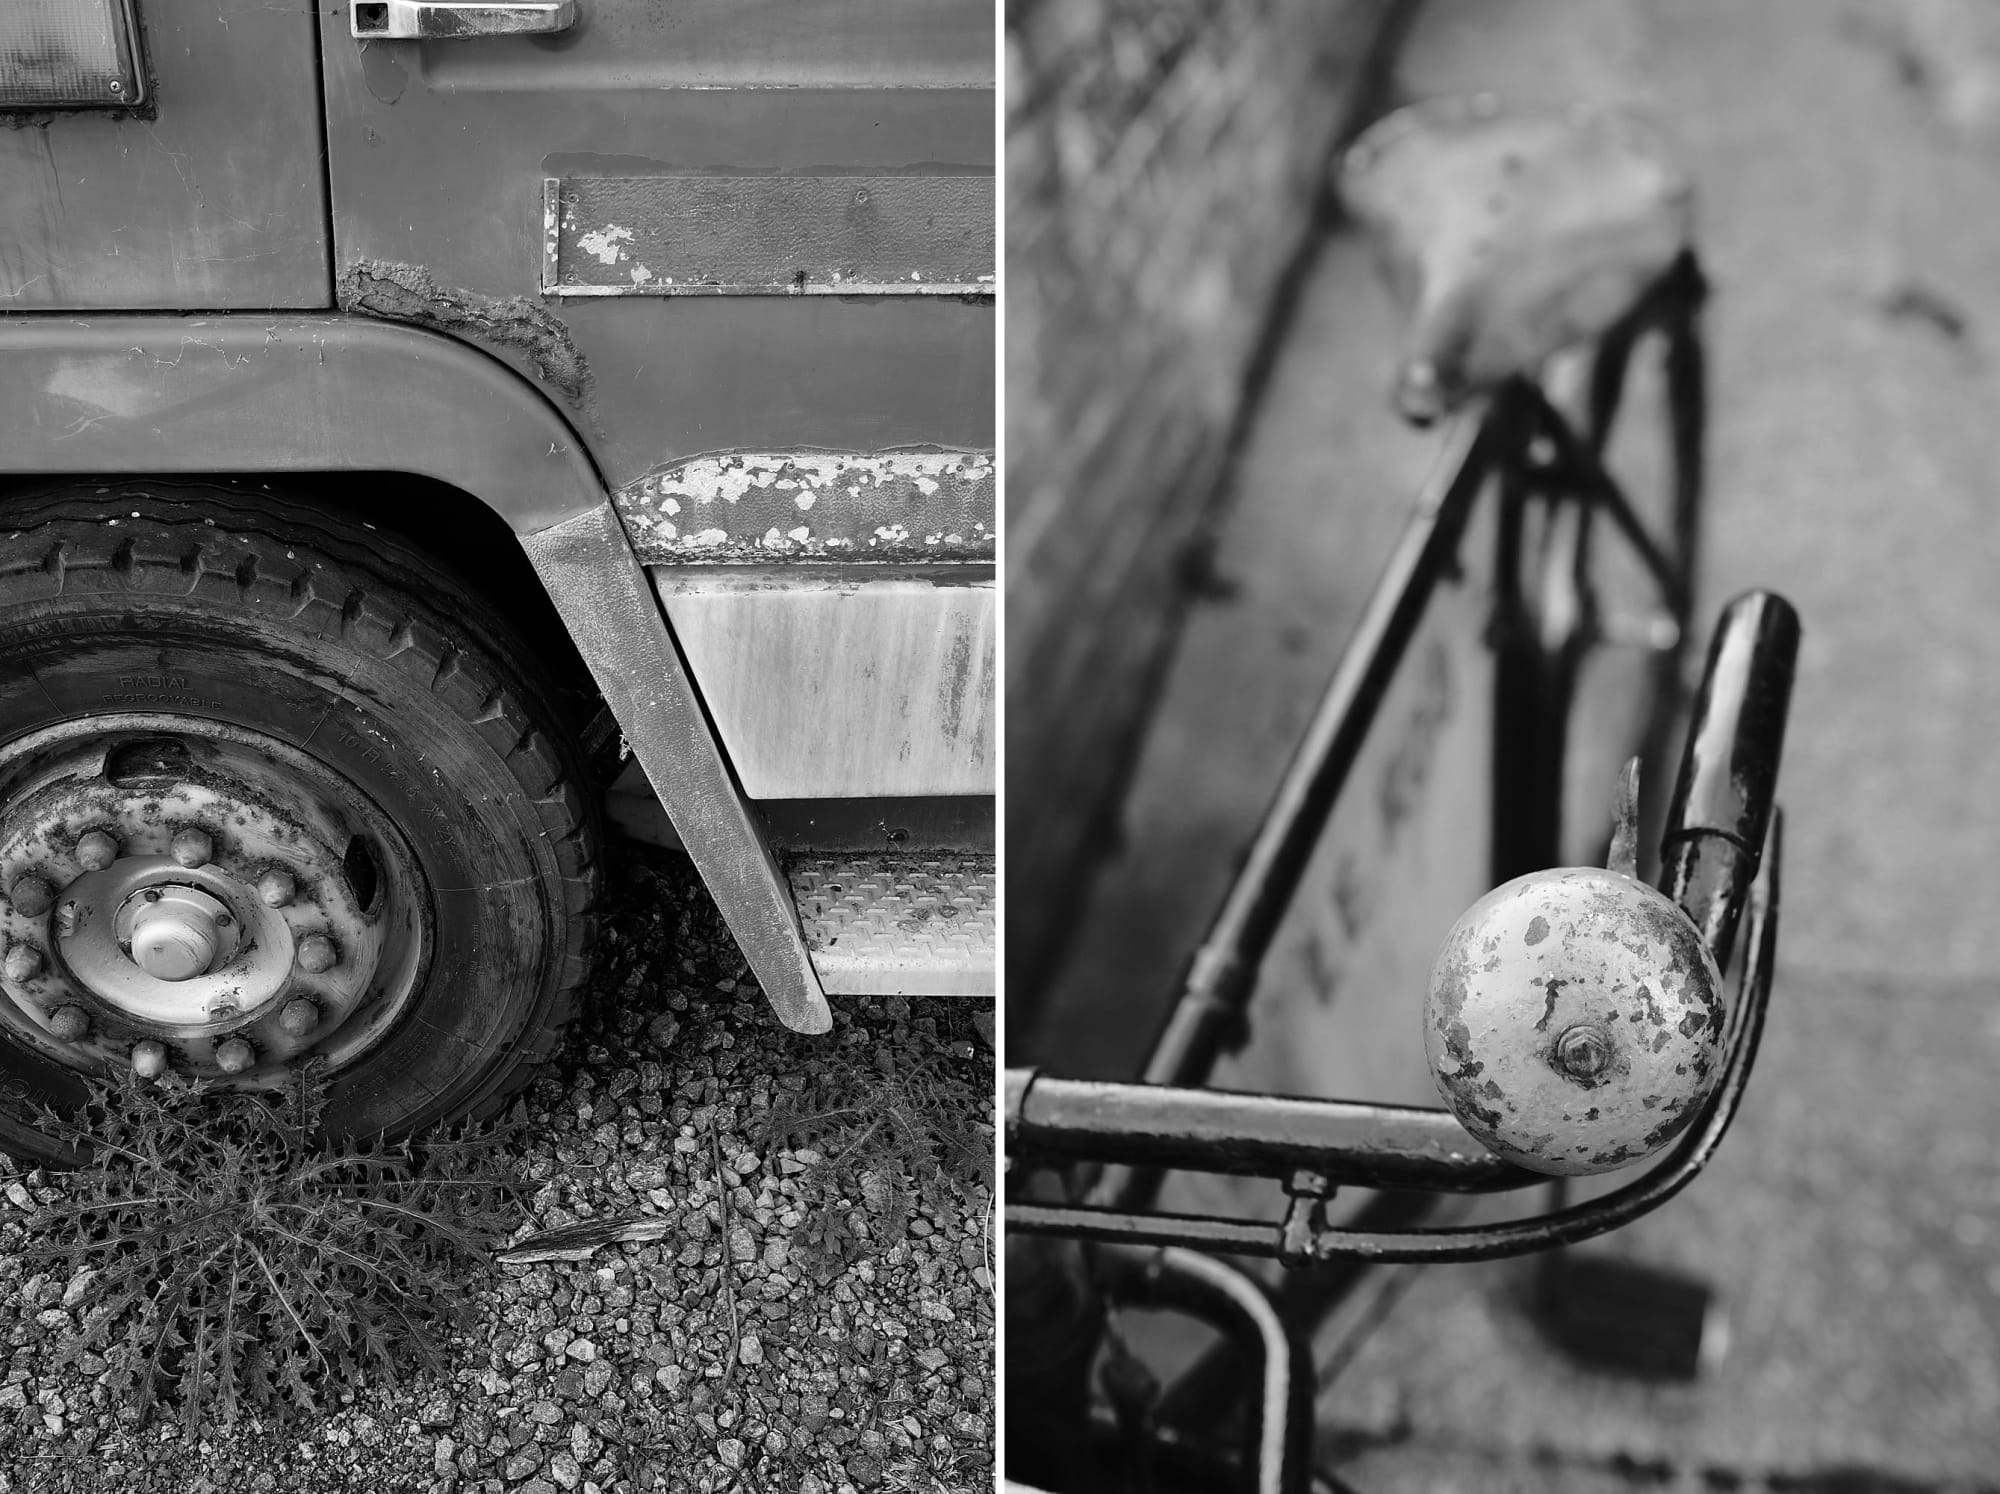 derelict fire engine / old bike bell